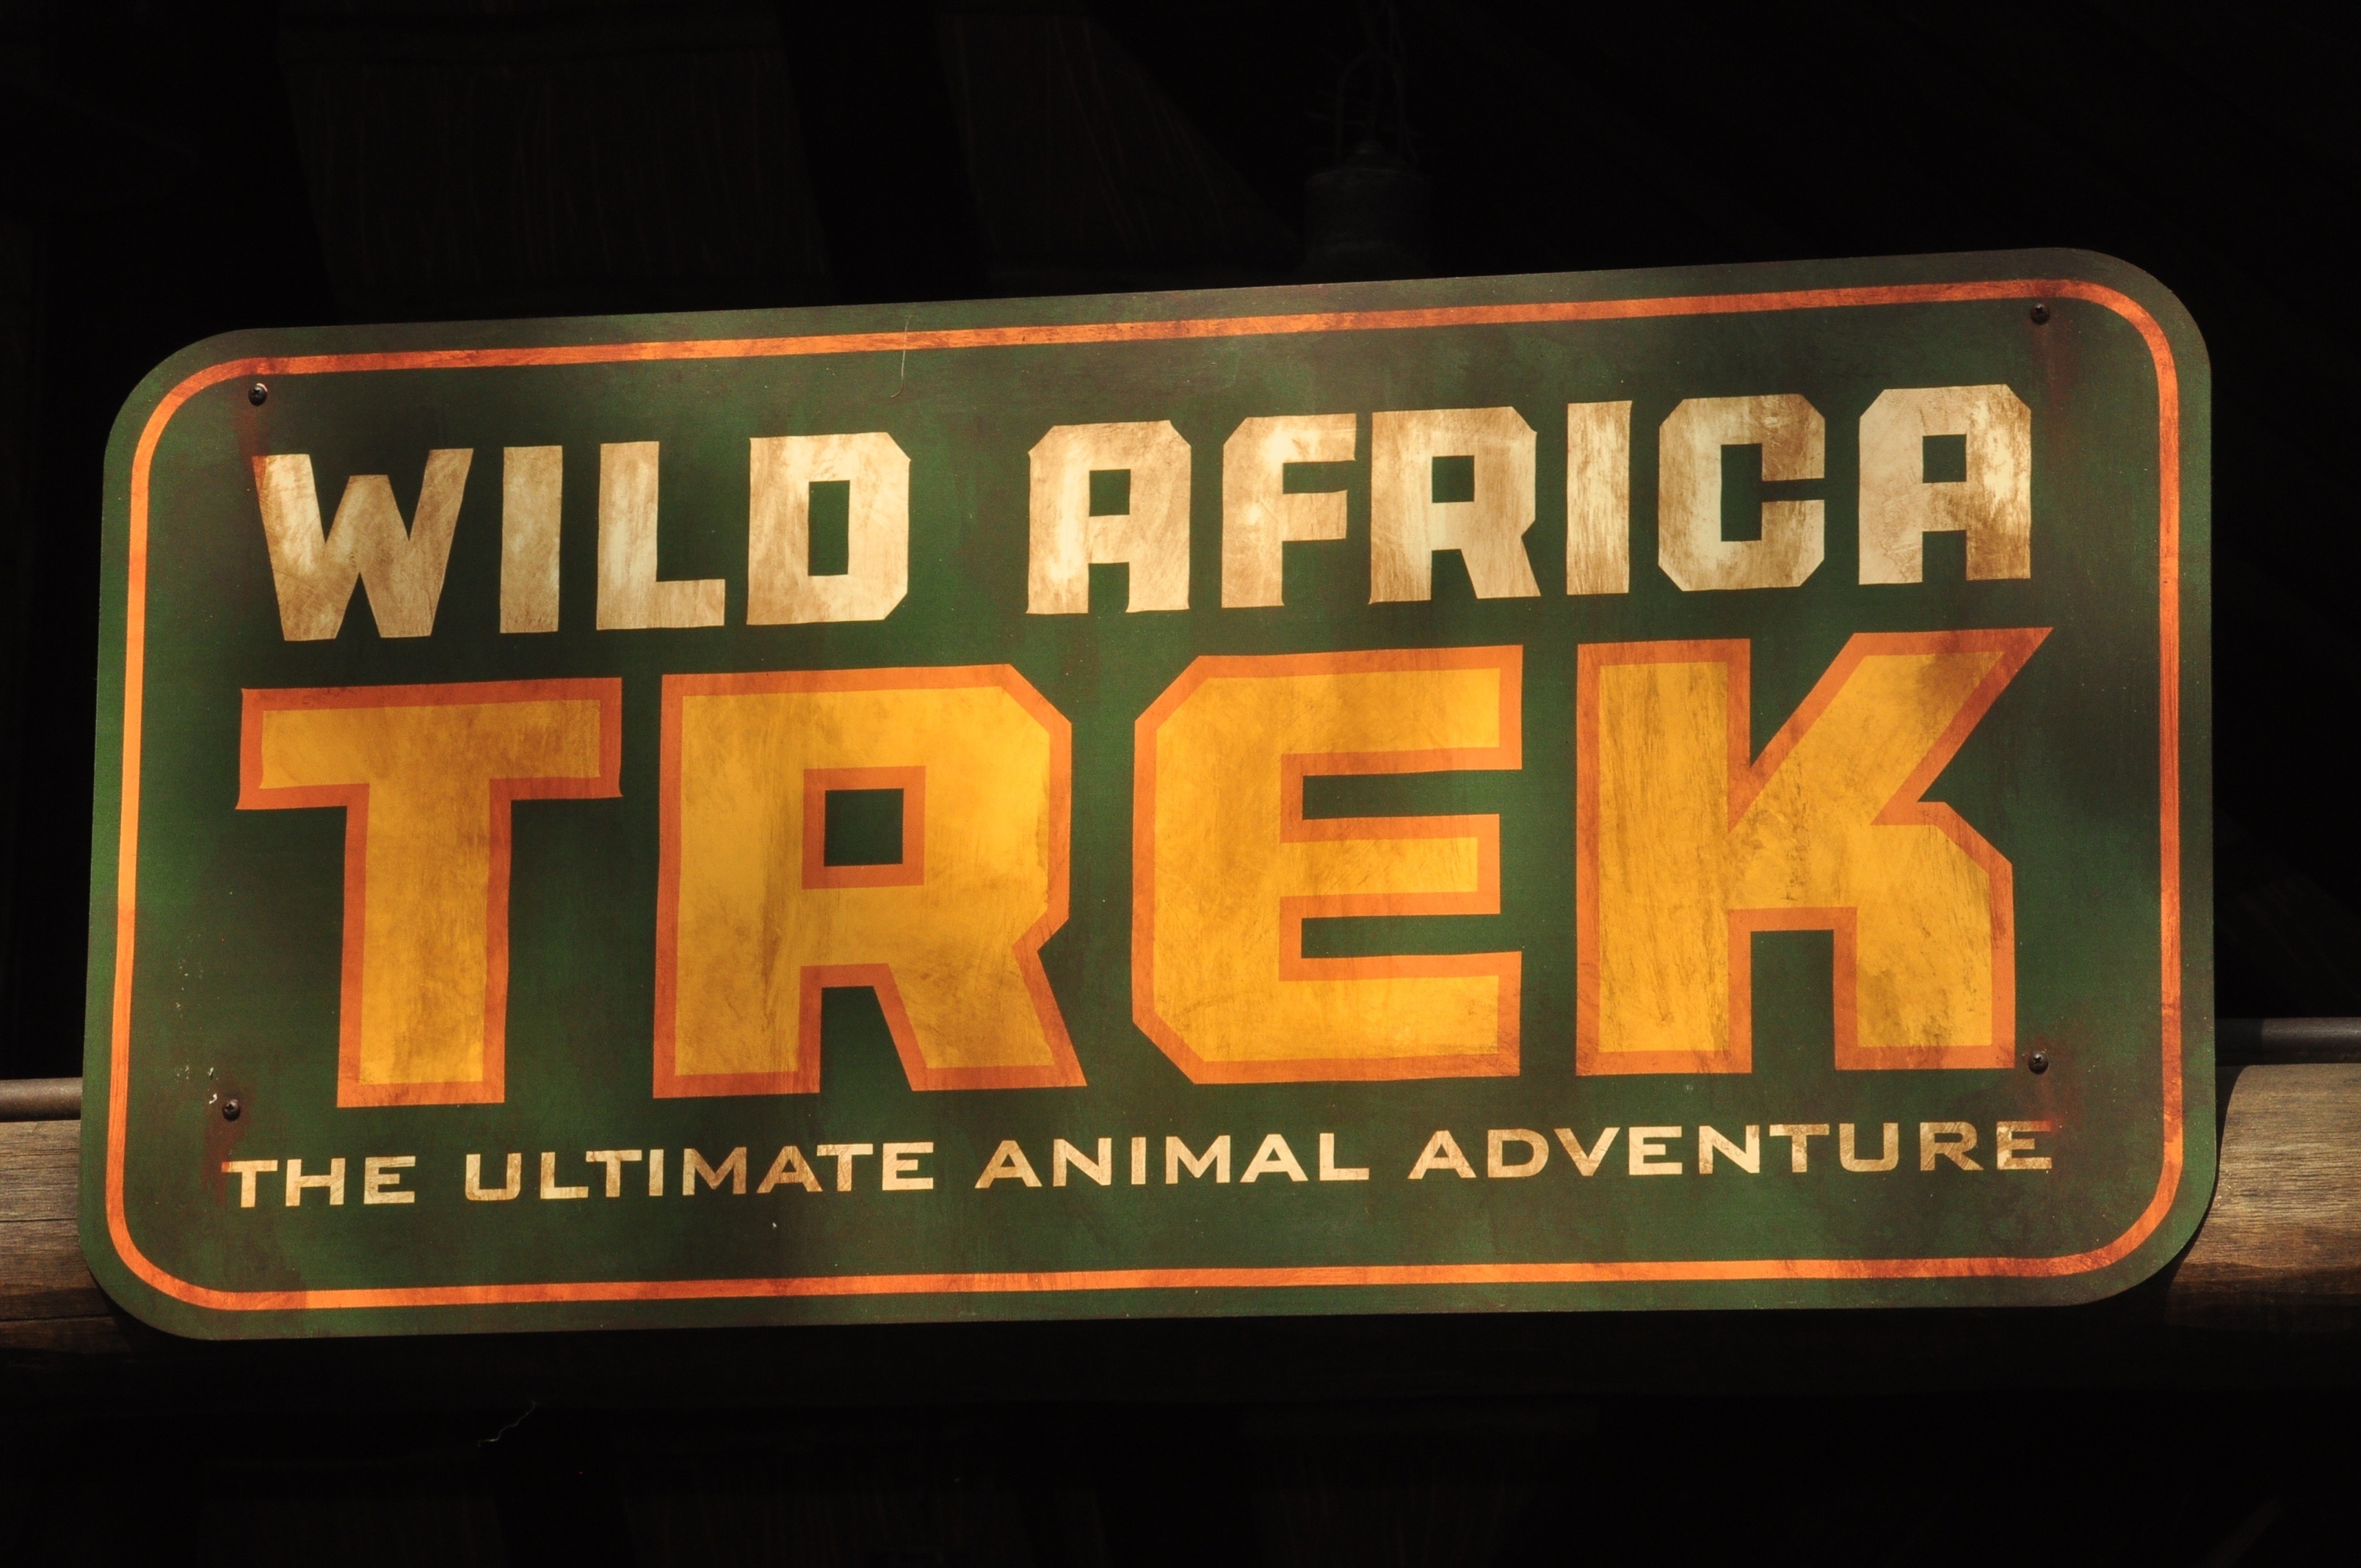 DIsney's Wild Africa Trek